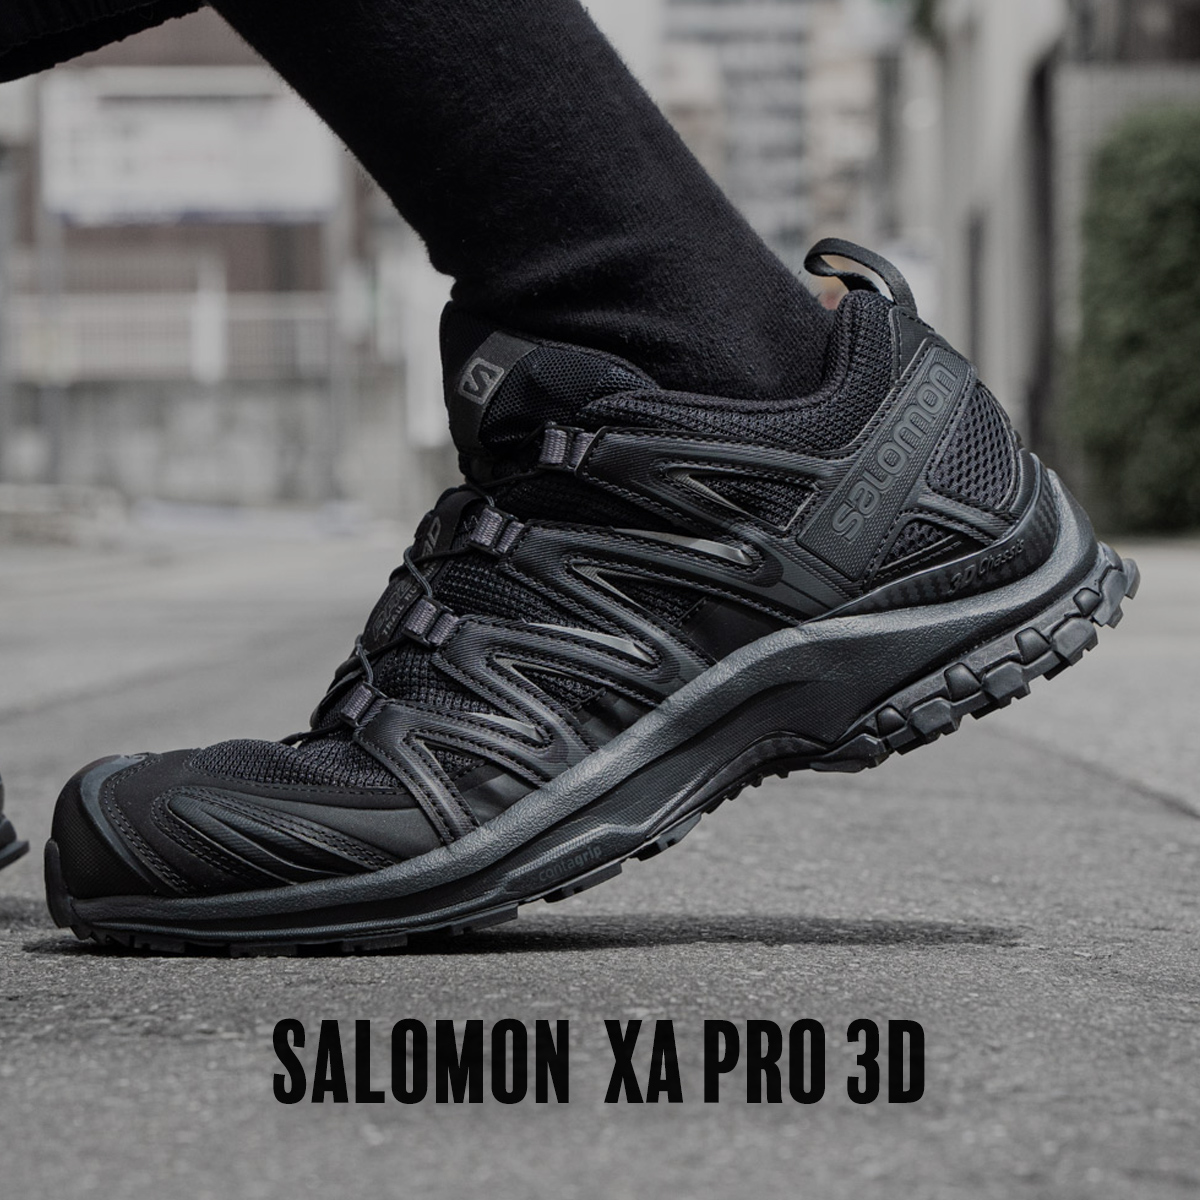 SALOMON XA PRO 3D | HUES 福岡セレクトショップ